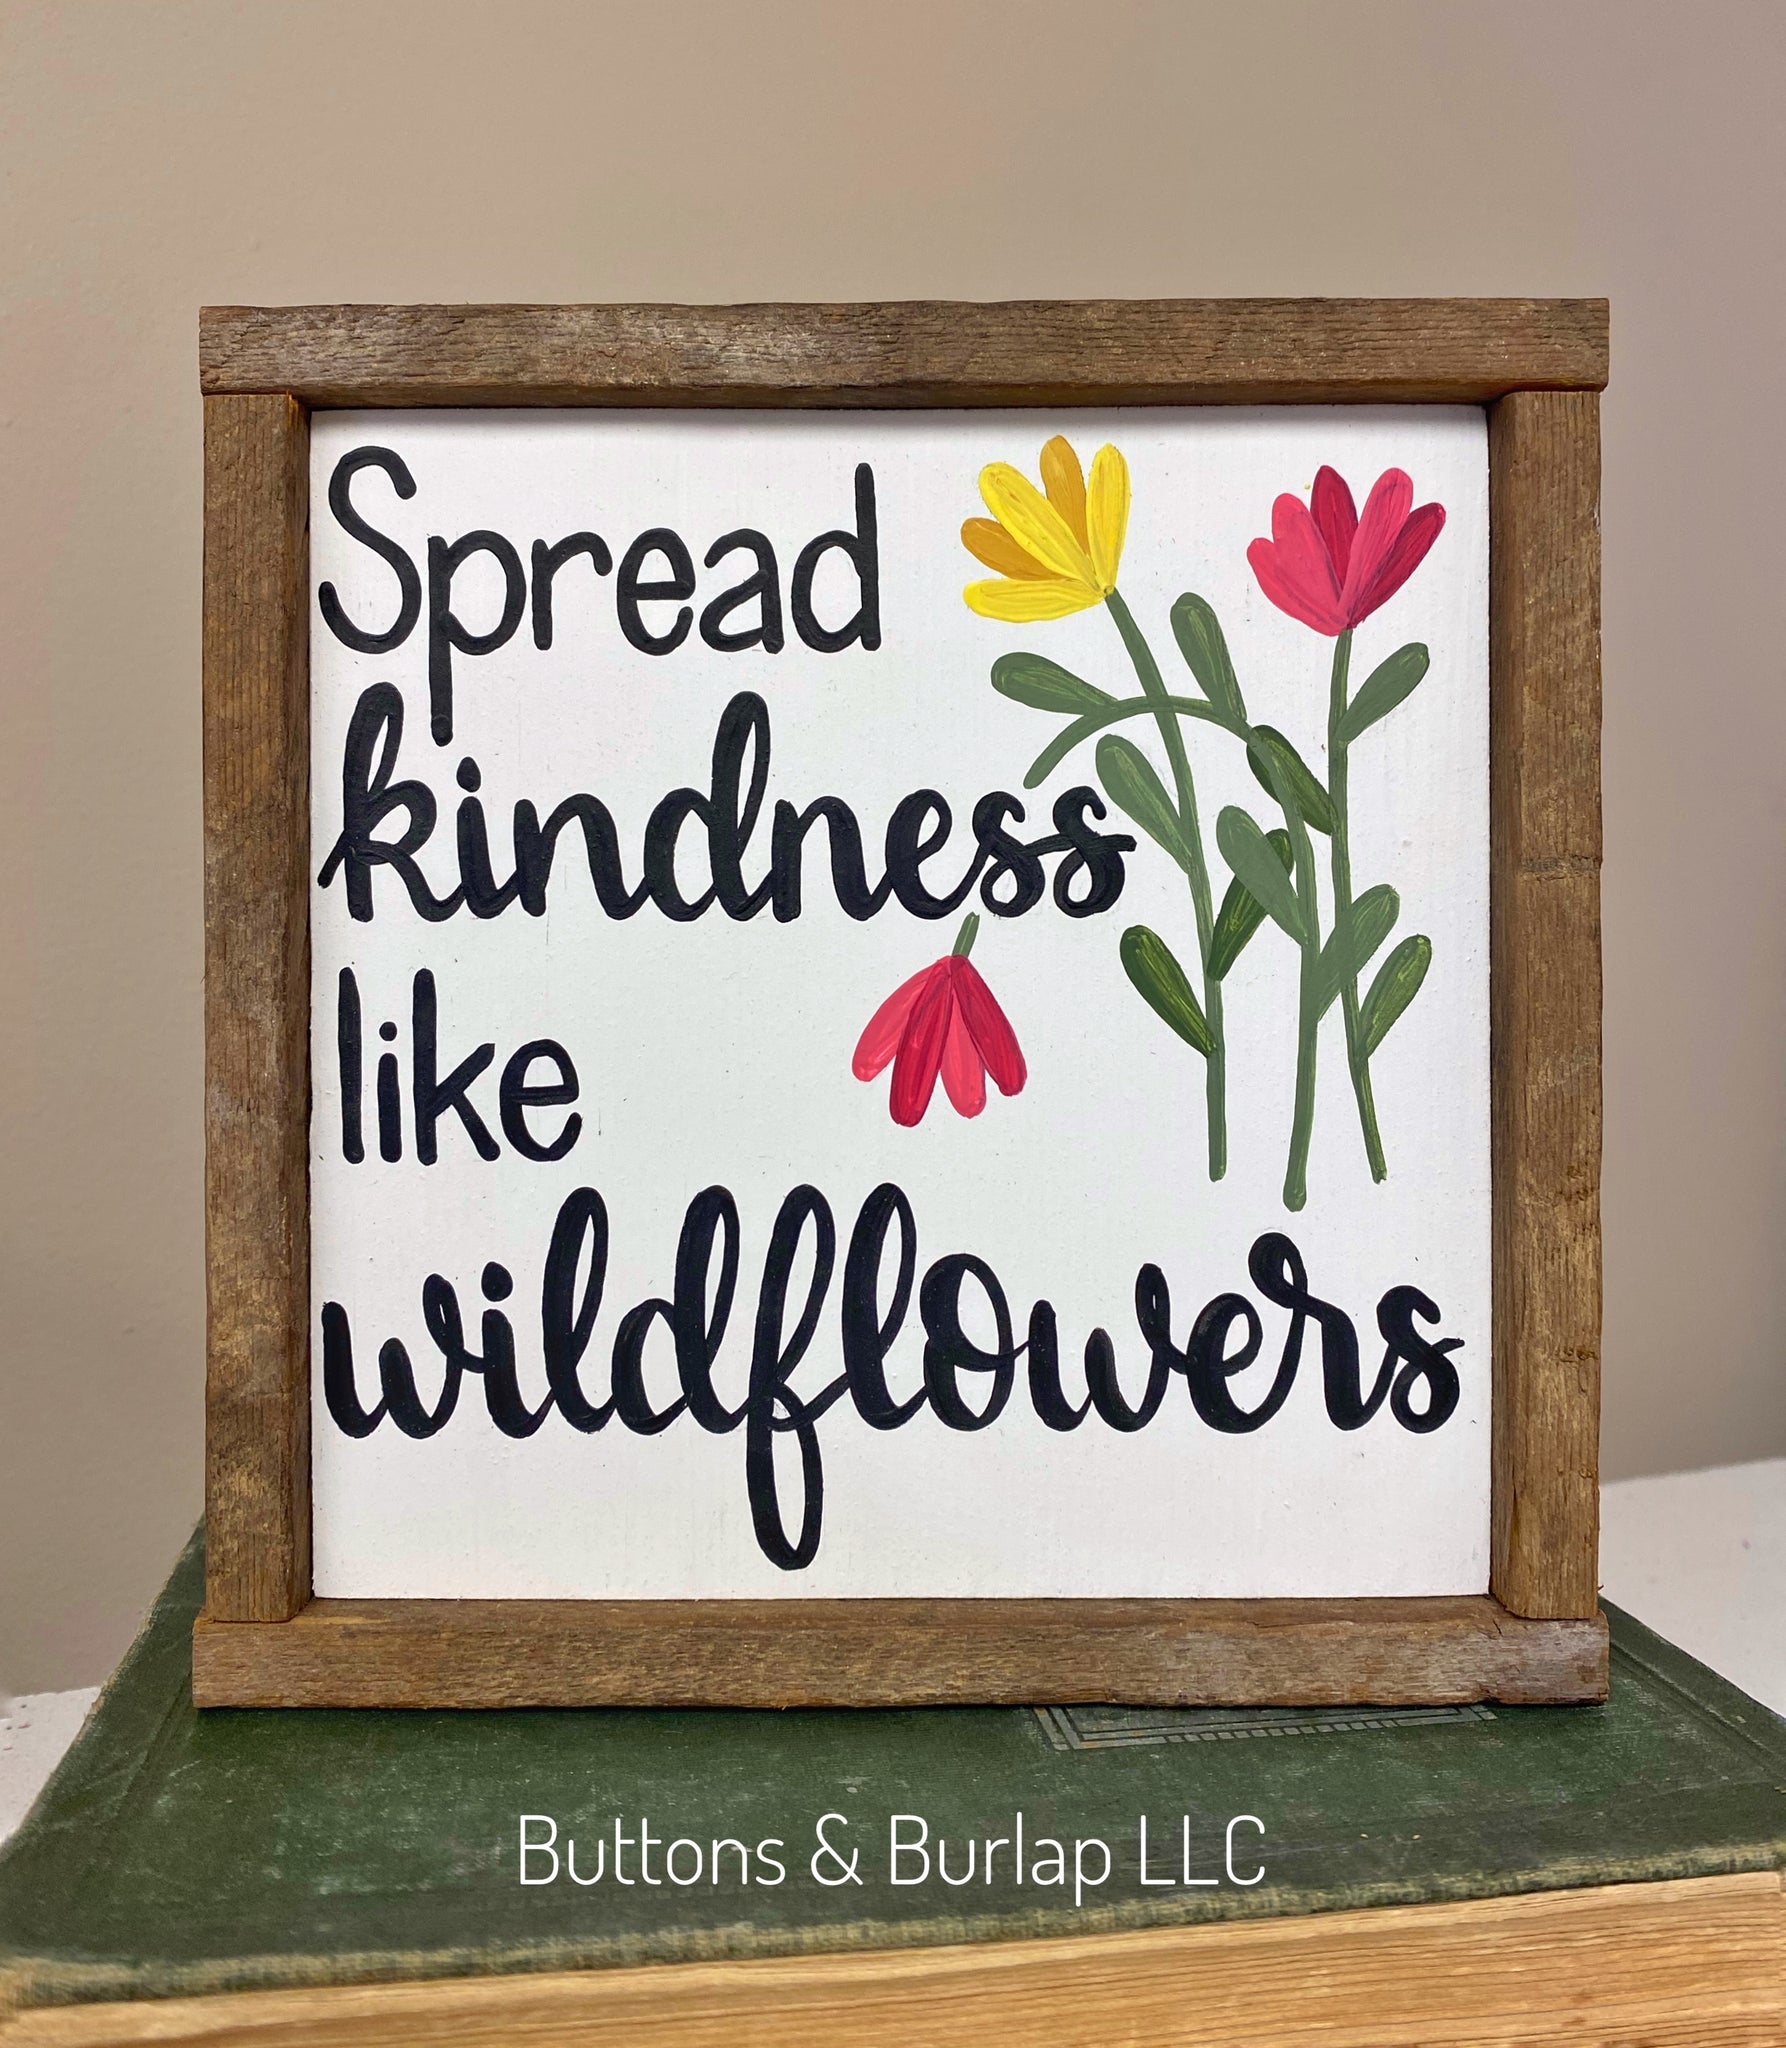 Spread kindness like wildflowers sign